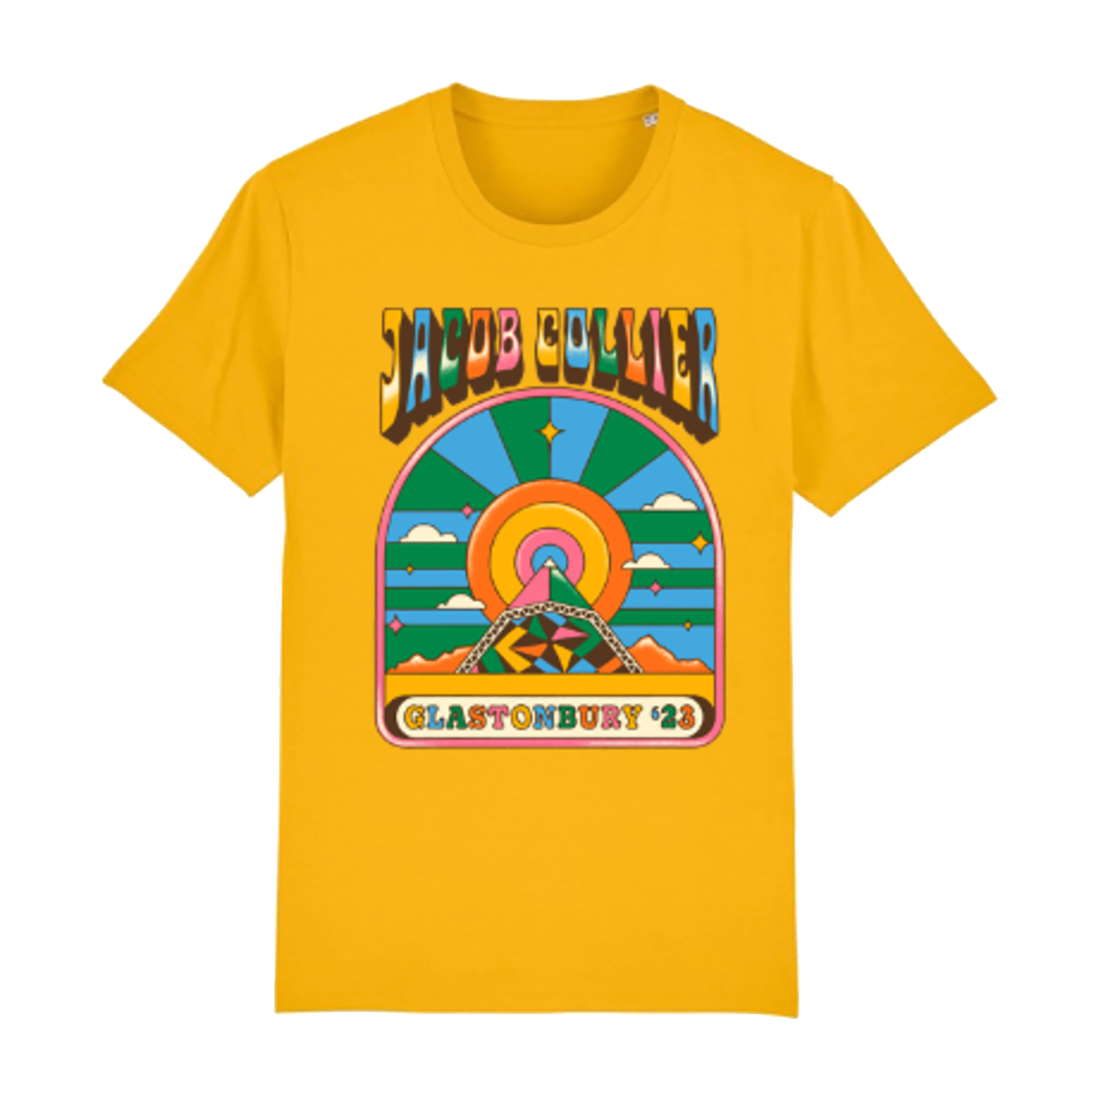 Jacob Collier - Limited Edition Glastonbury '23 Show T-Shirt 